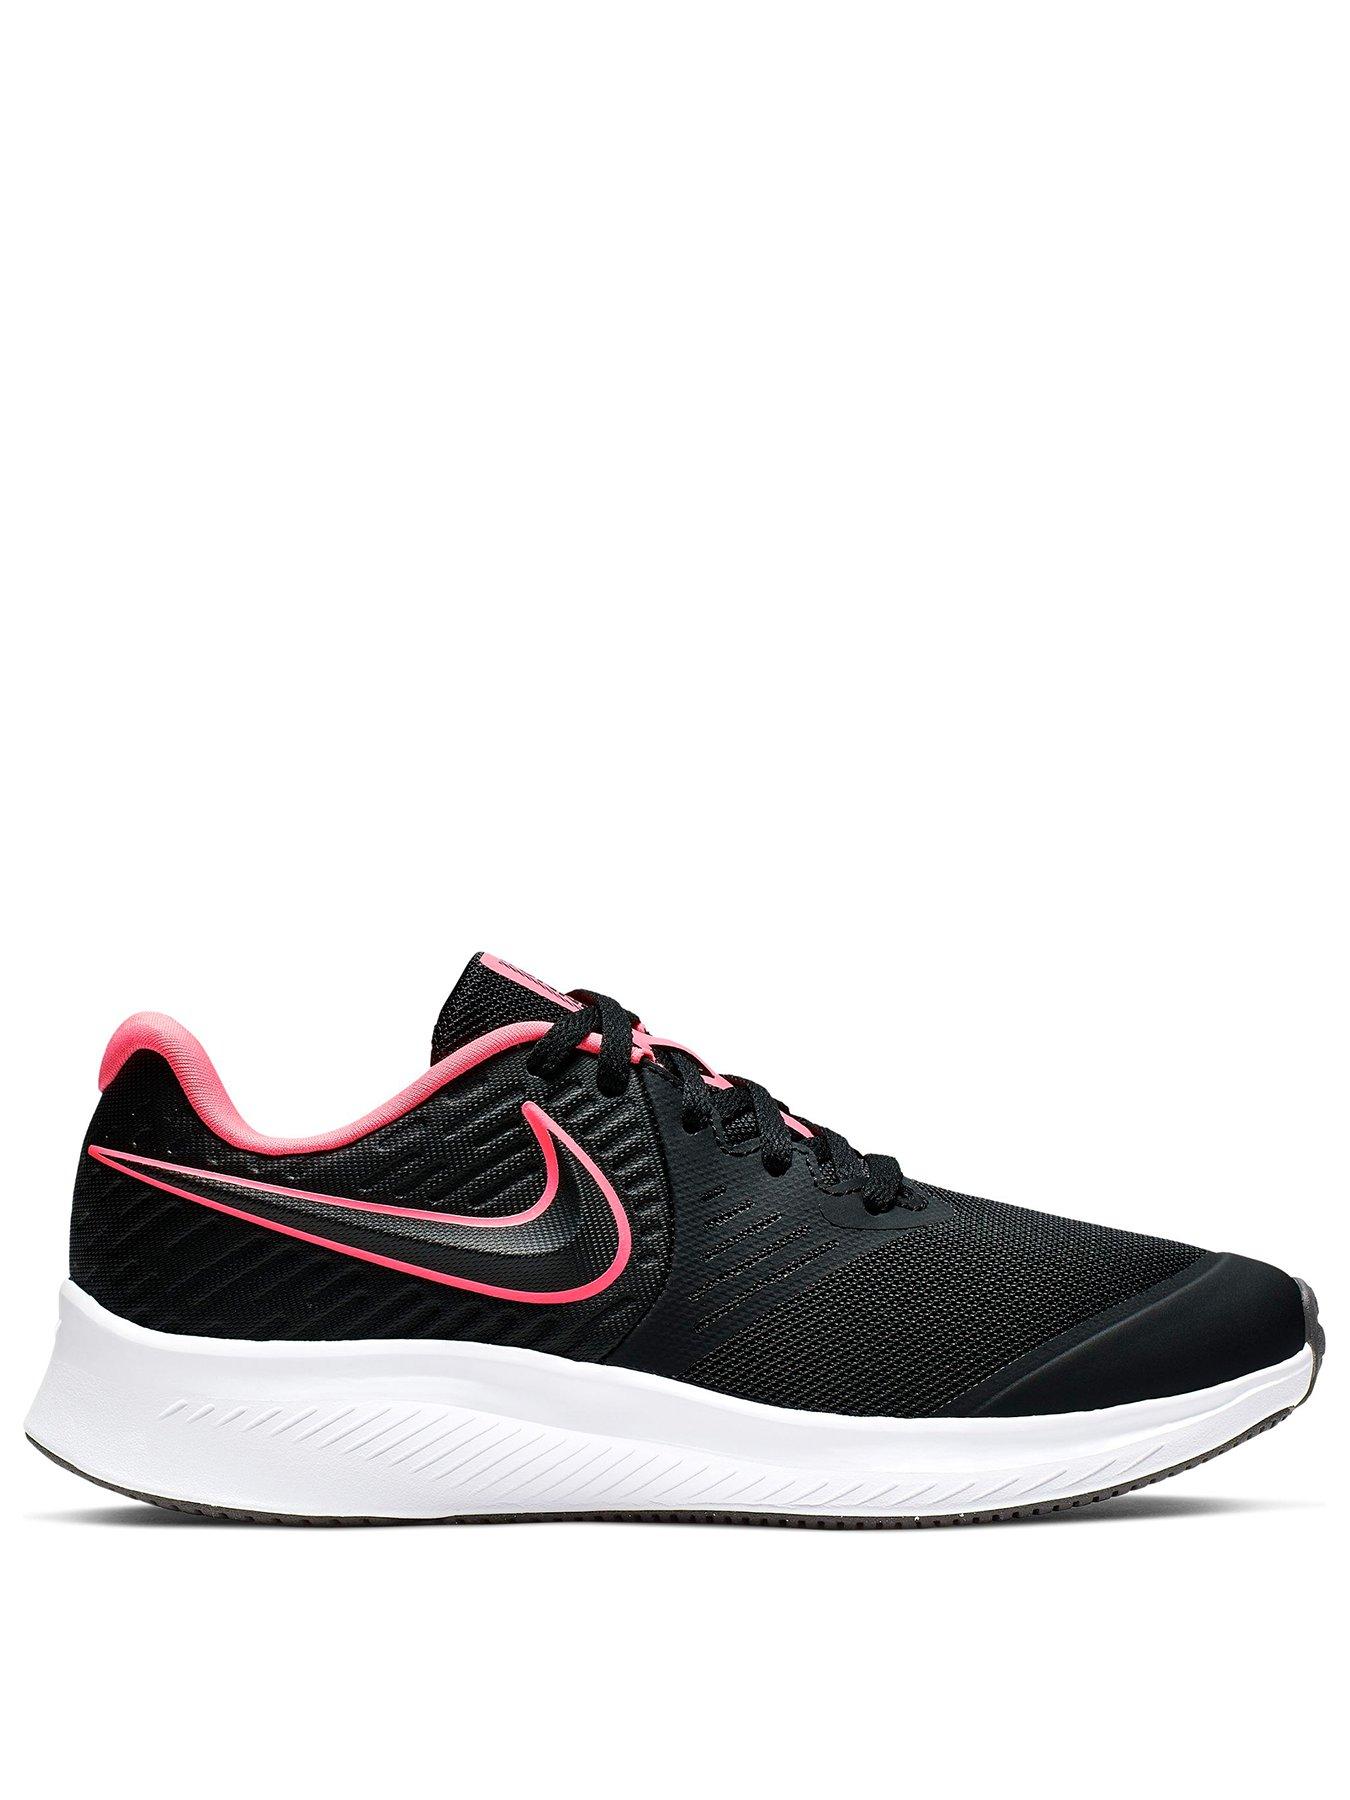 Nike Star Runner 2 Junior Trainers - Black/Pink | very.co.uk